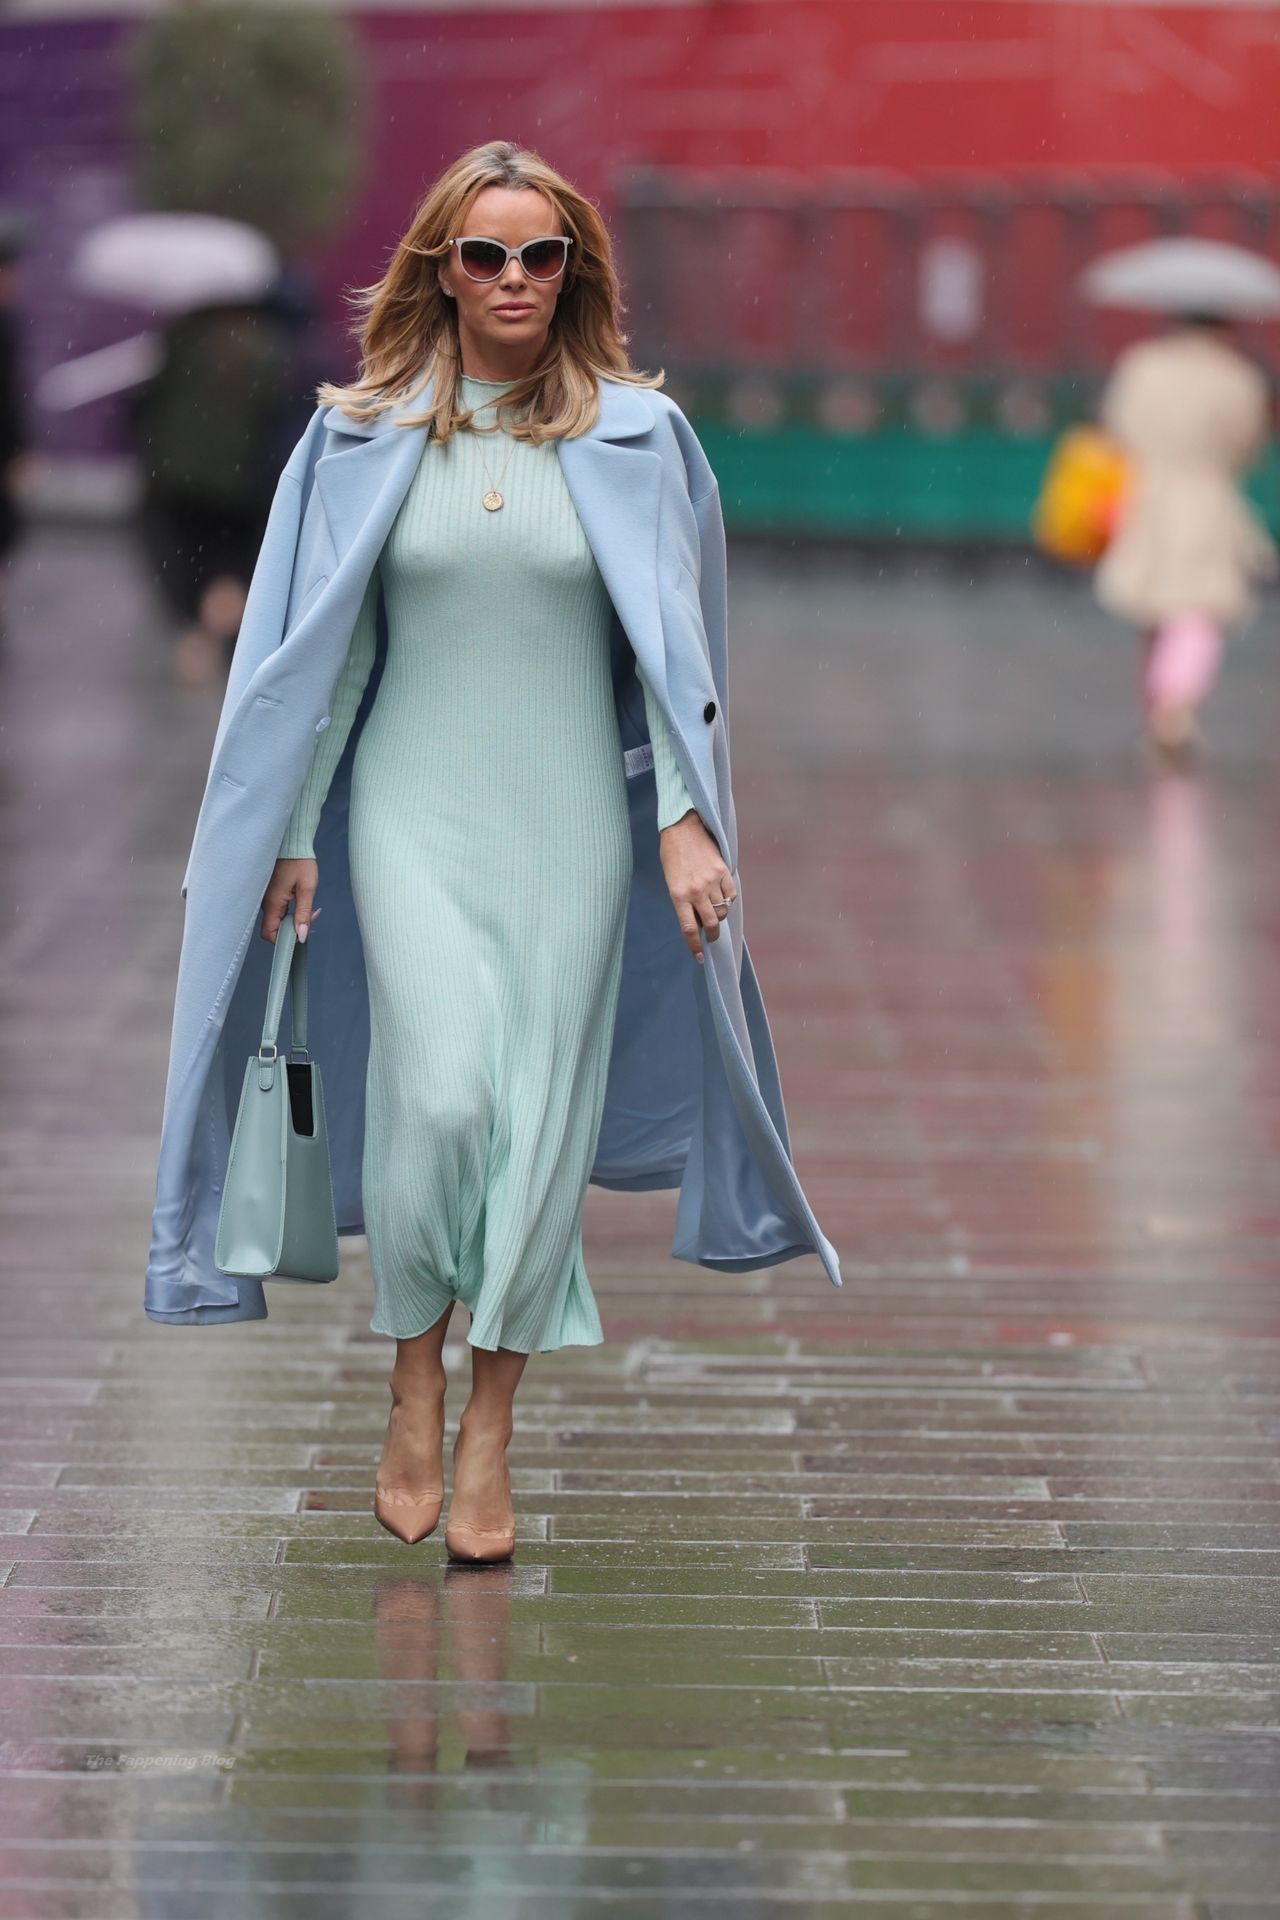 Amanda Holden Makes a Revealing Appearance Looks Sensational in London (74 Photos)